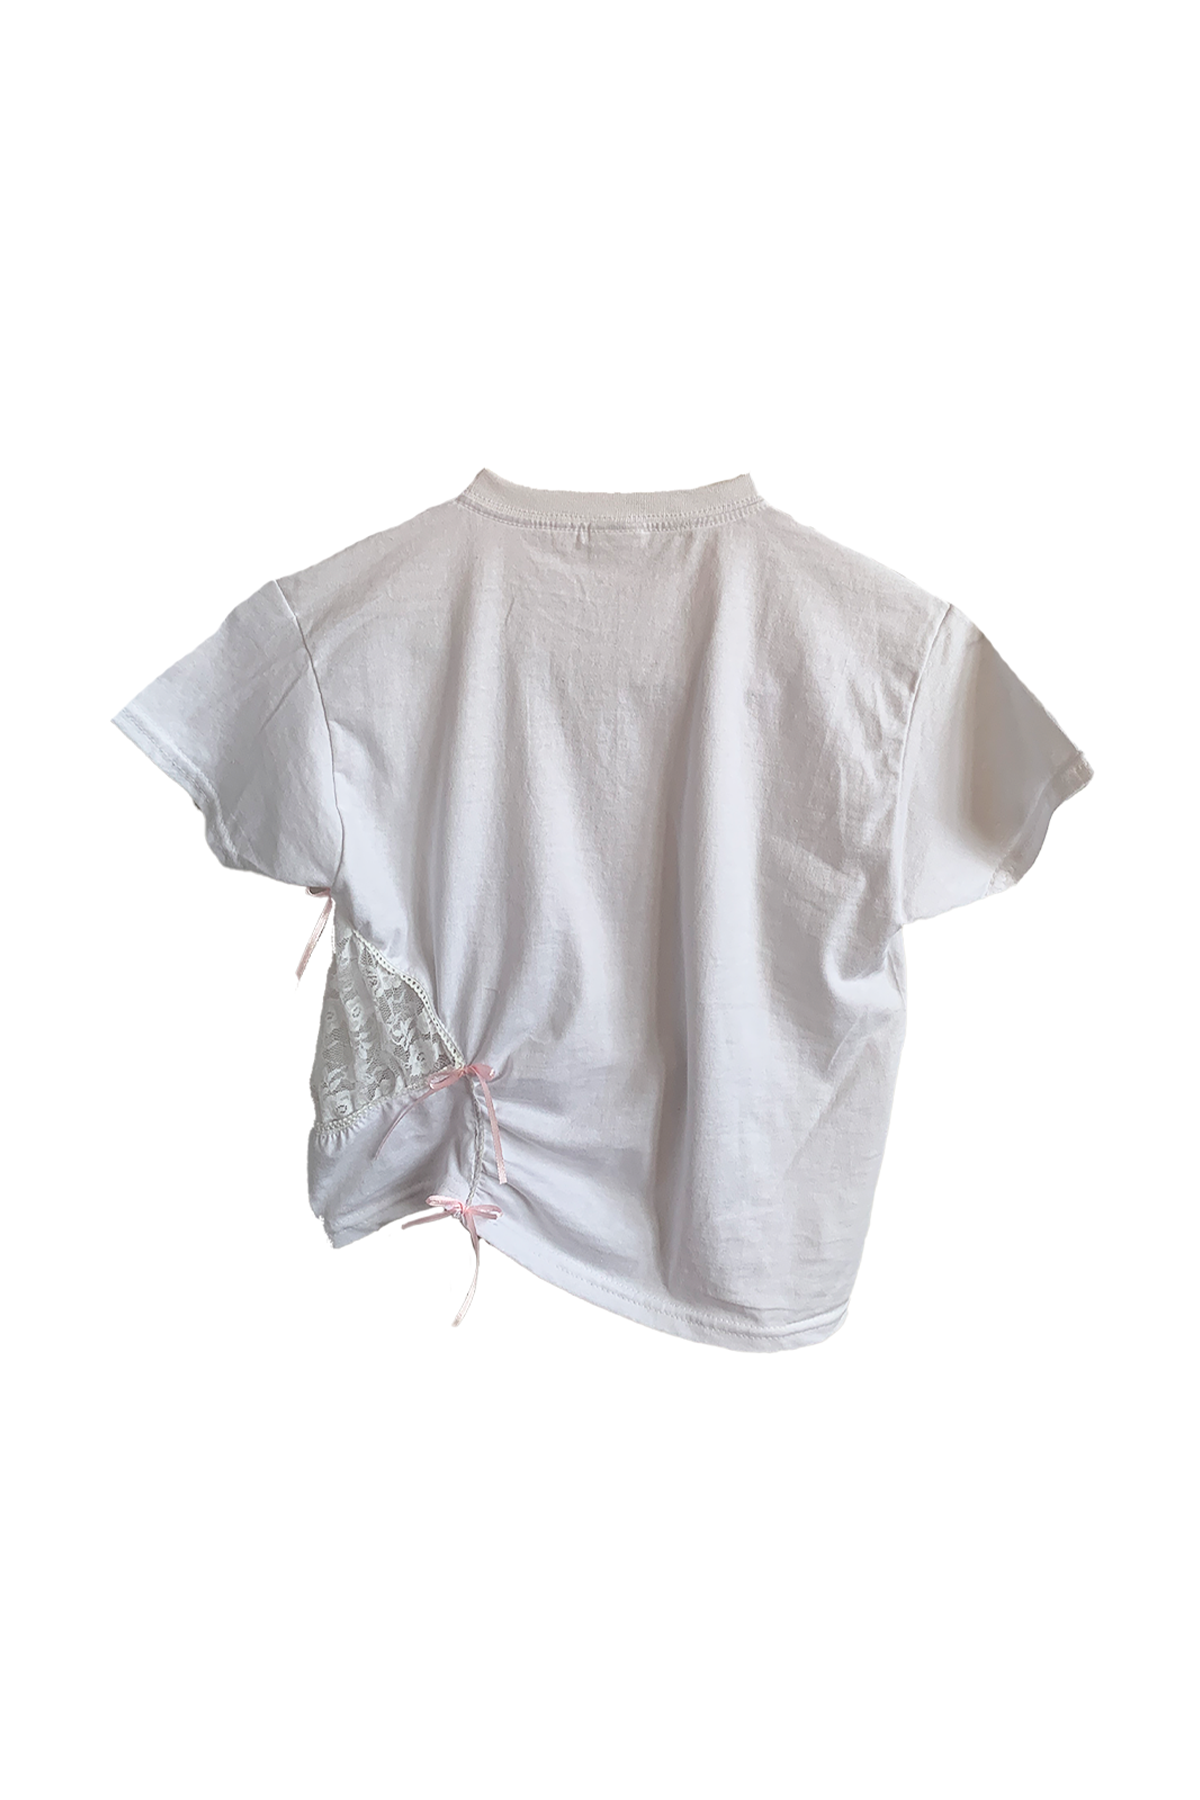 'ℒℴ𝓋ℯ 𝓎ℴ𝓊' Drape T-shirt White